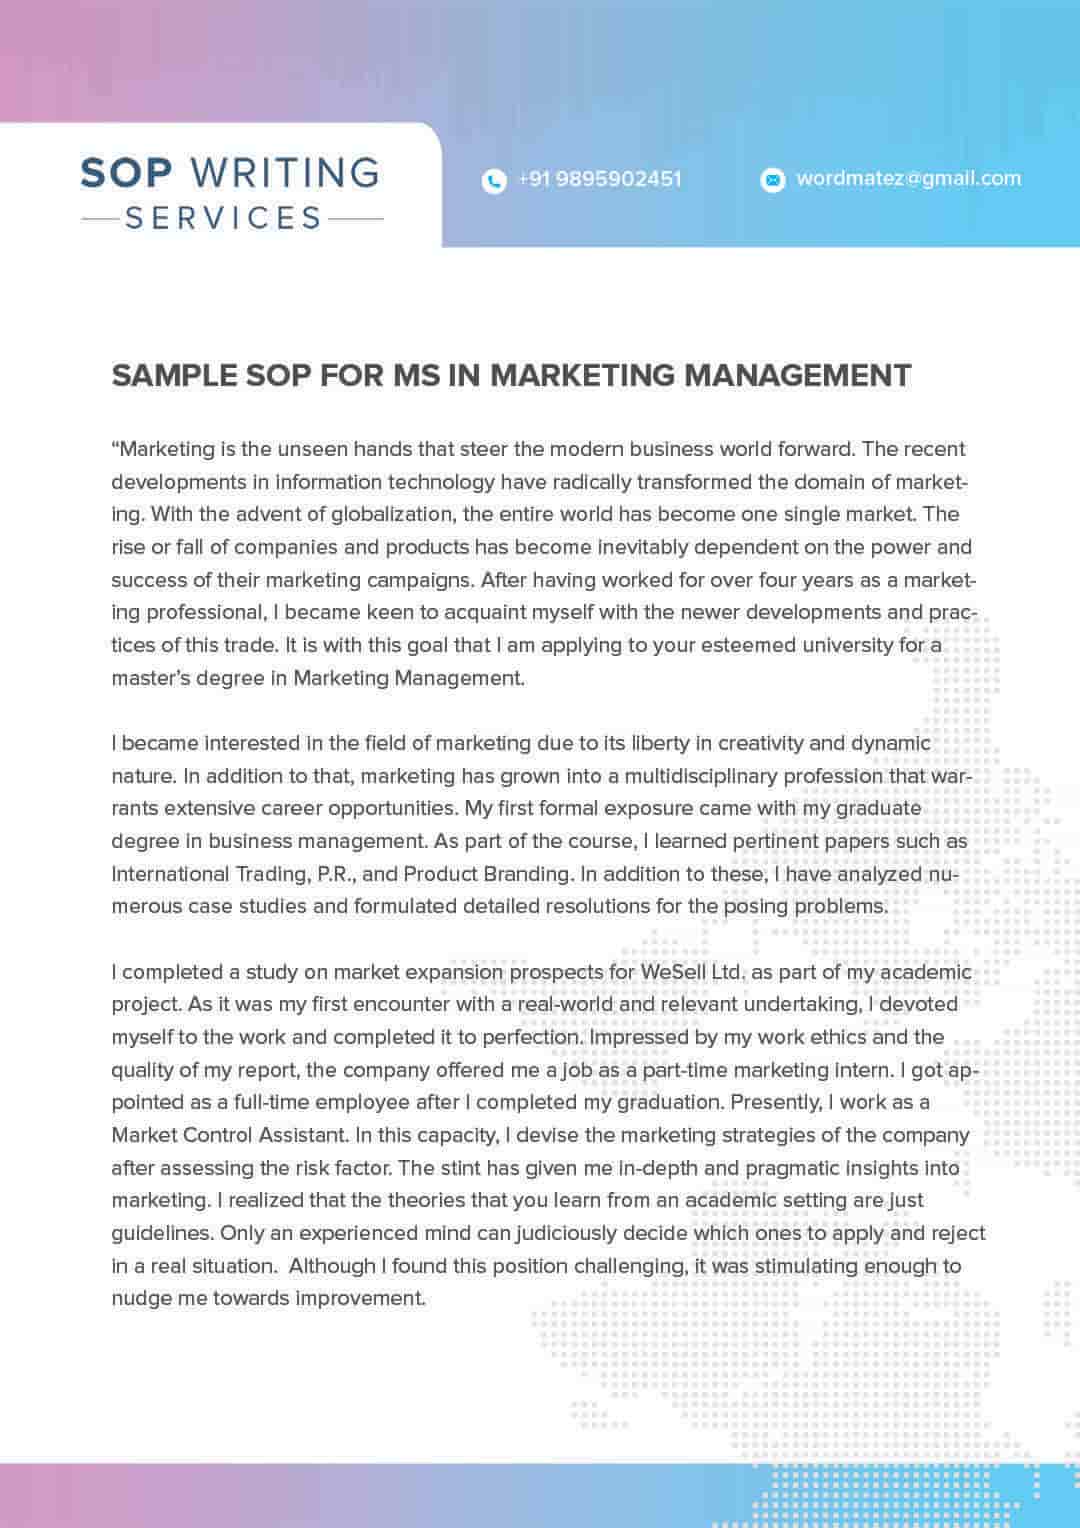 Sample sop for MS in Marketing Management